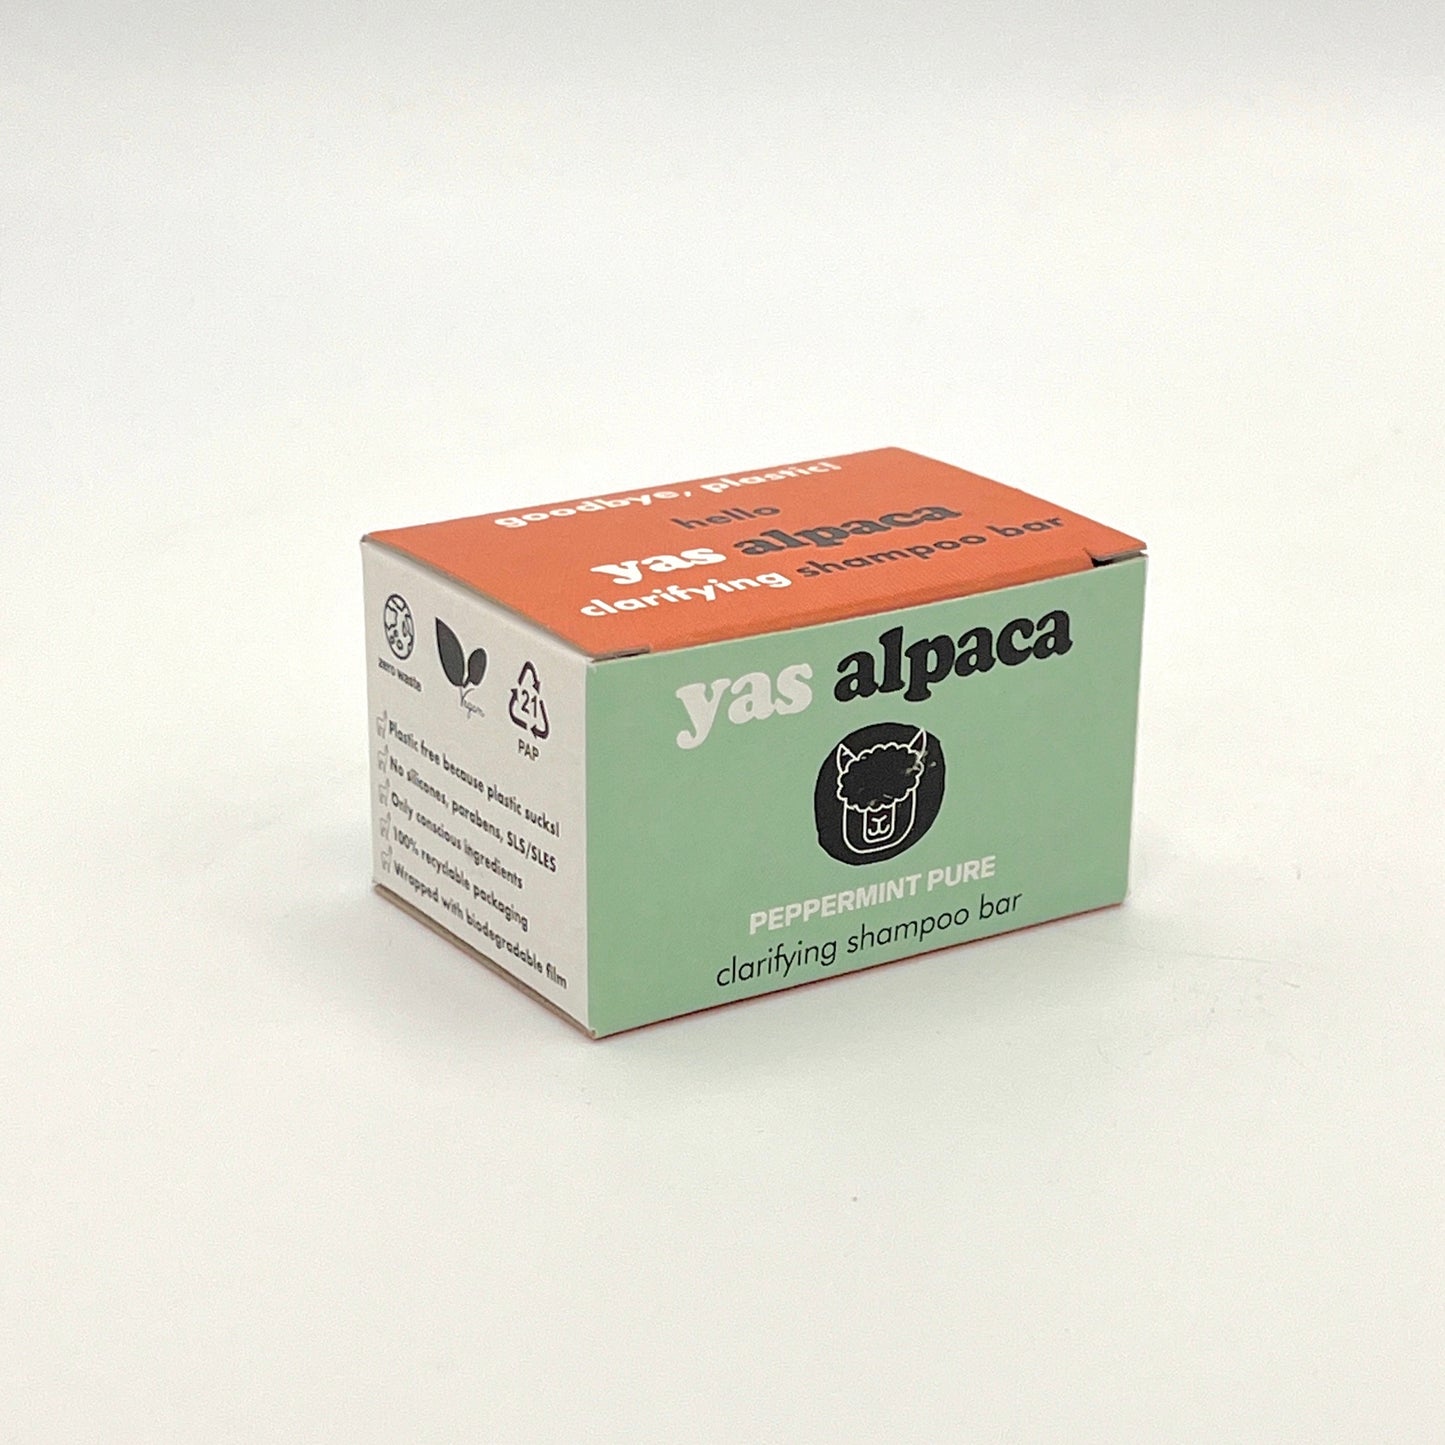 Shampoo from Yas Alpaca- Peppermint Pure